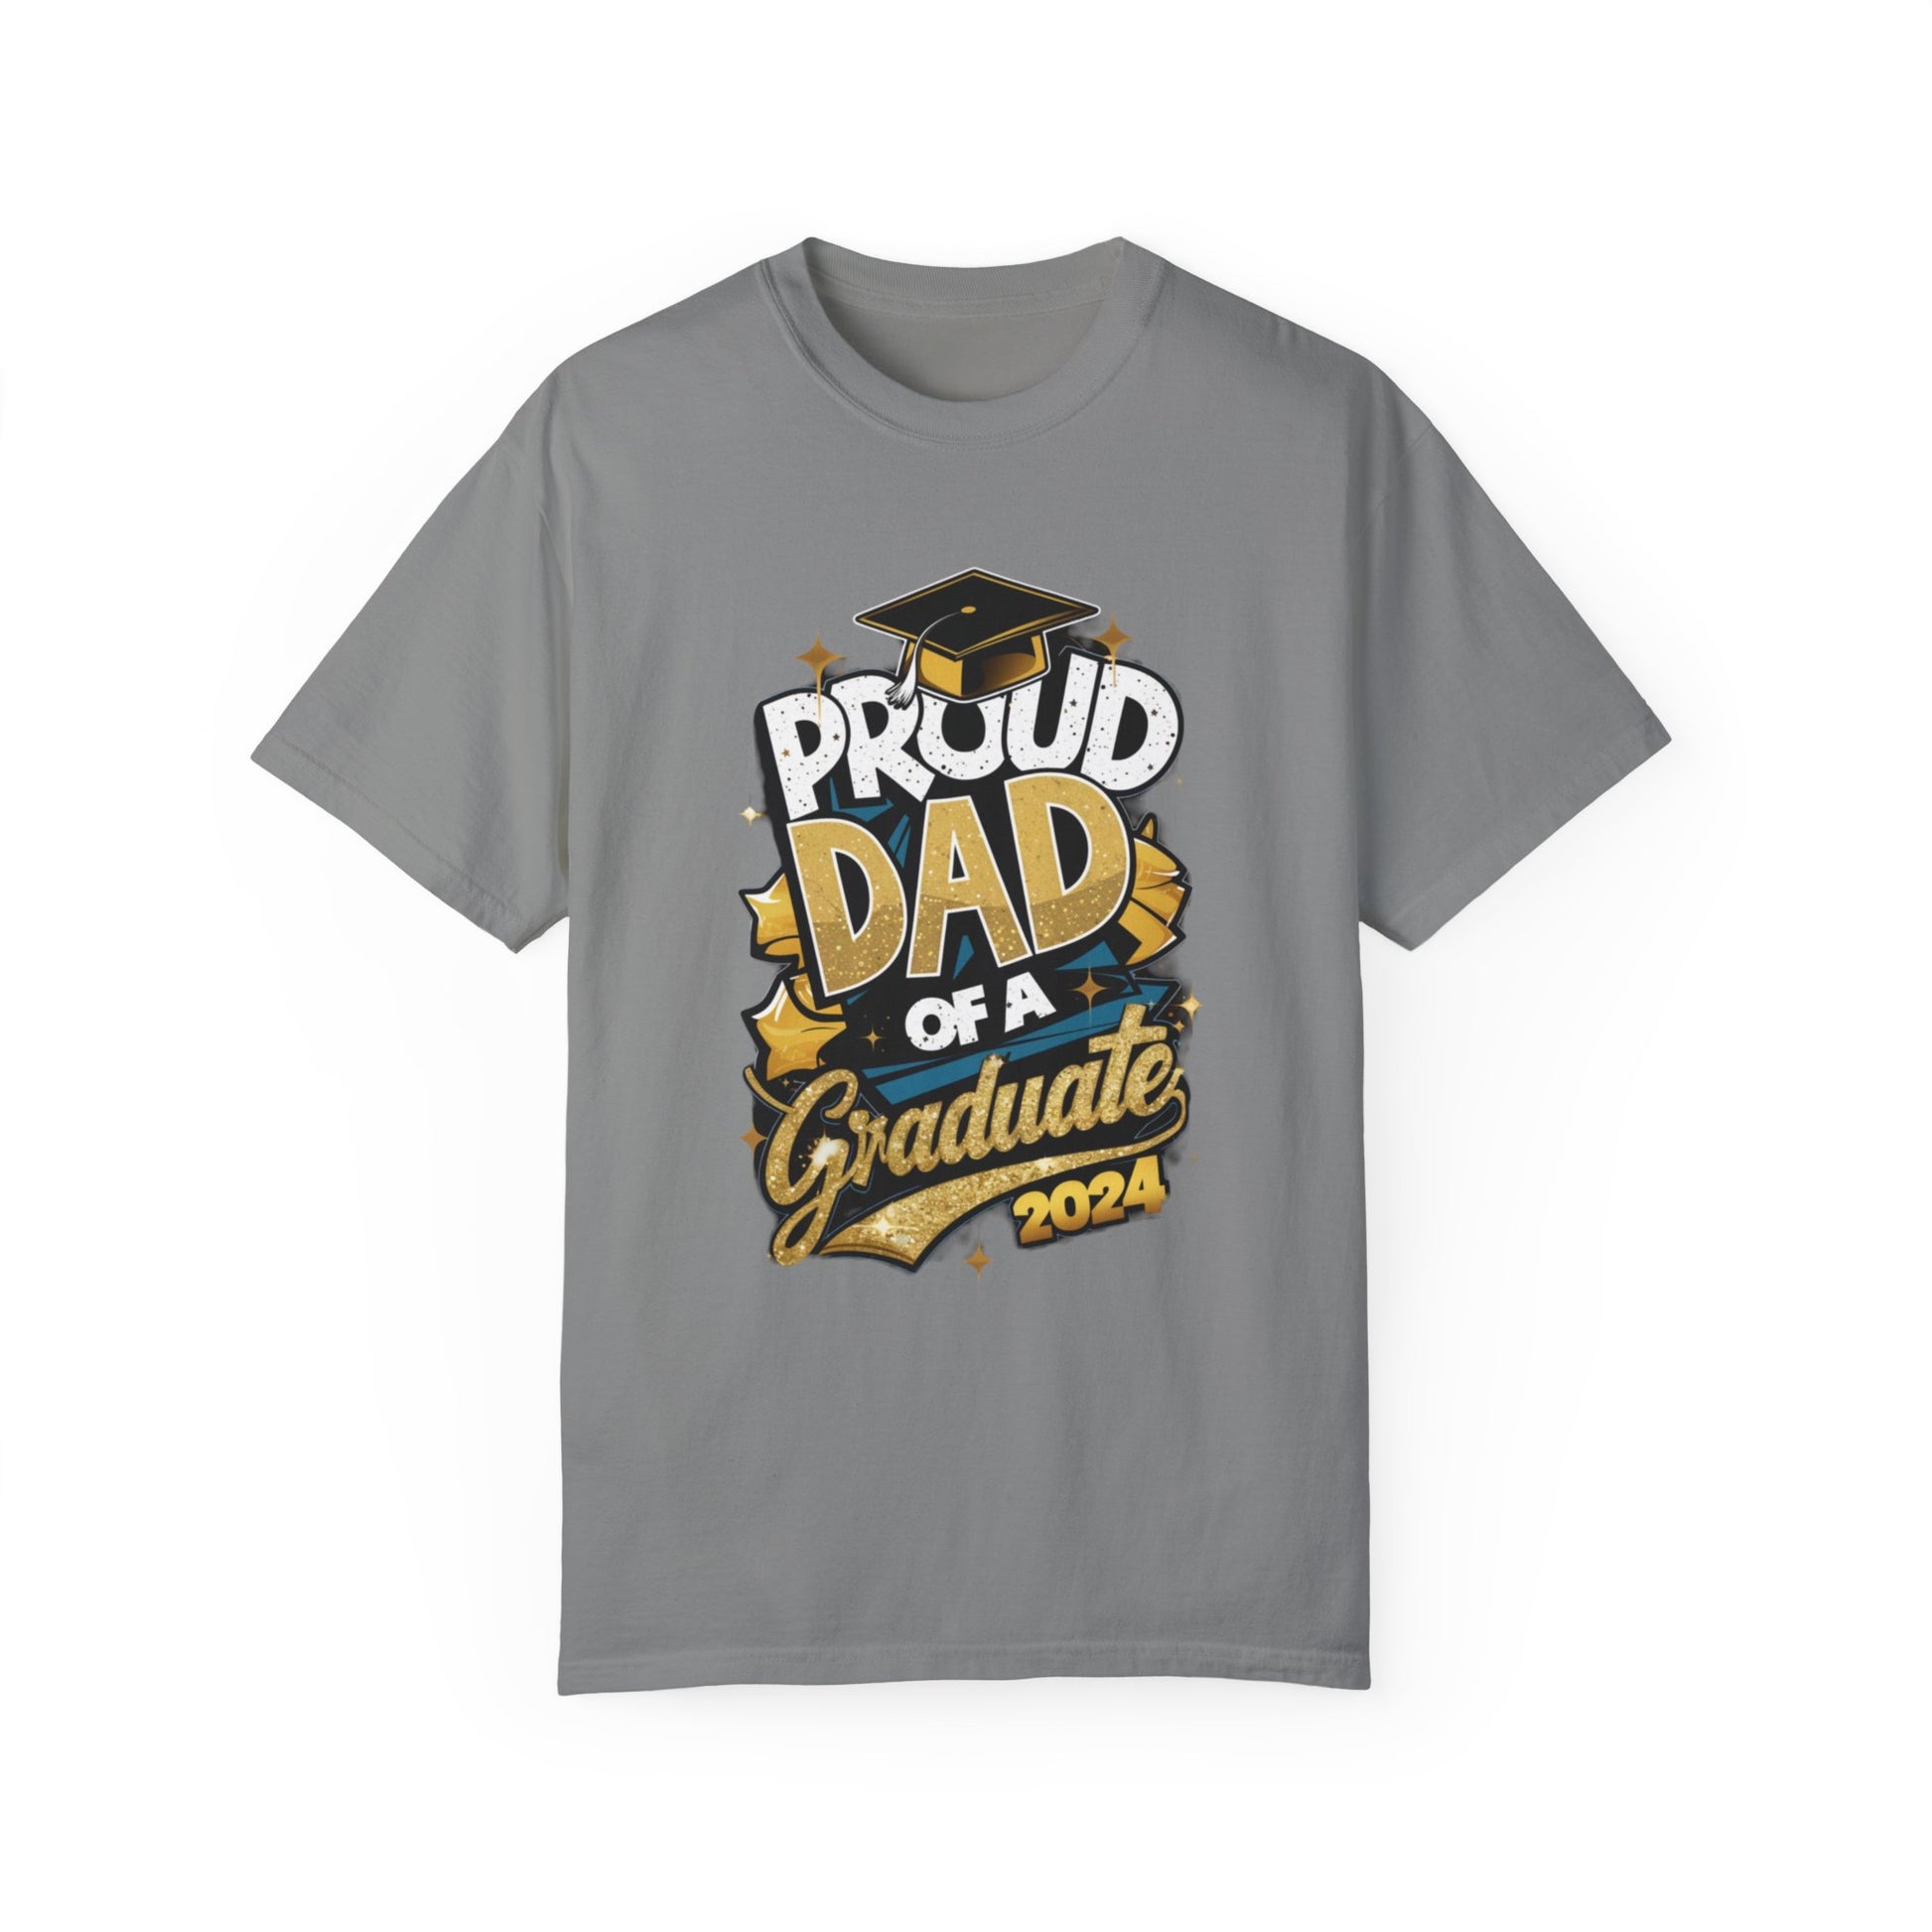 Proud Dad of a 2024 Graduate Unisex Garment-dyed T-shirt Cotton Funny Humorous Graphic Soft Premium Unisex Men Women Granite T-shirt Birthday Gift-4